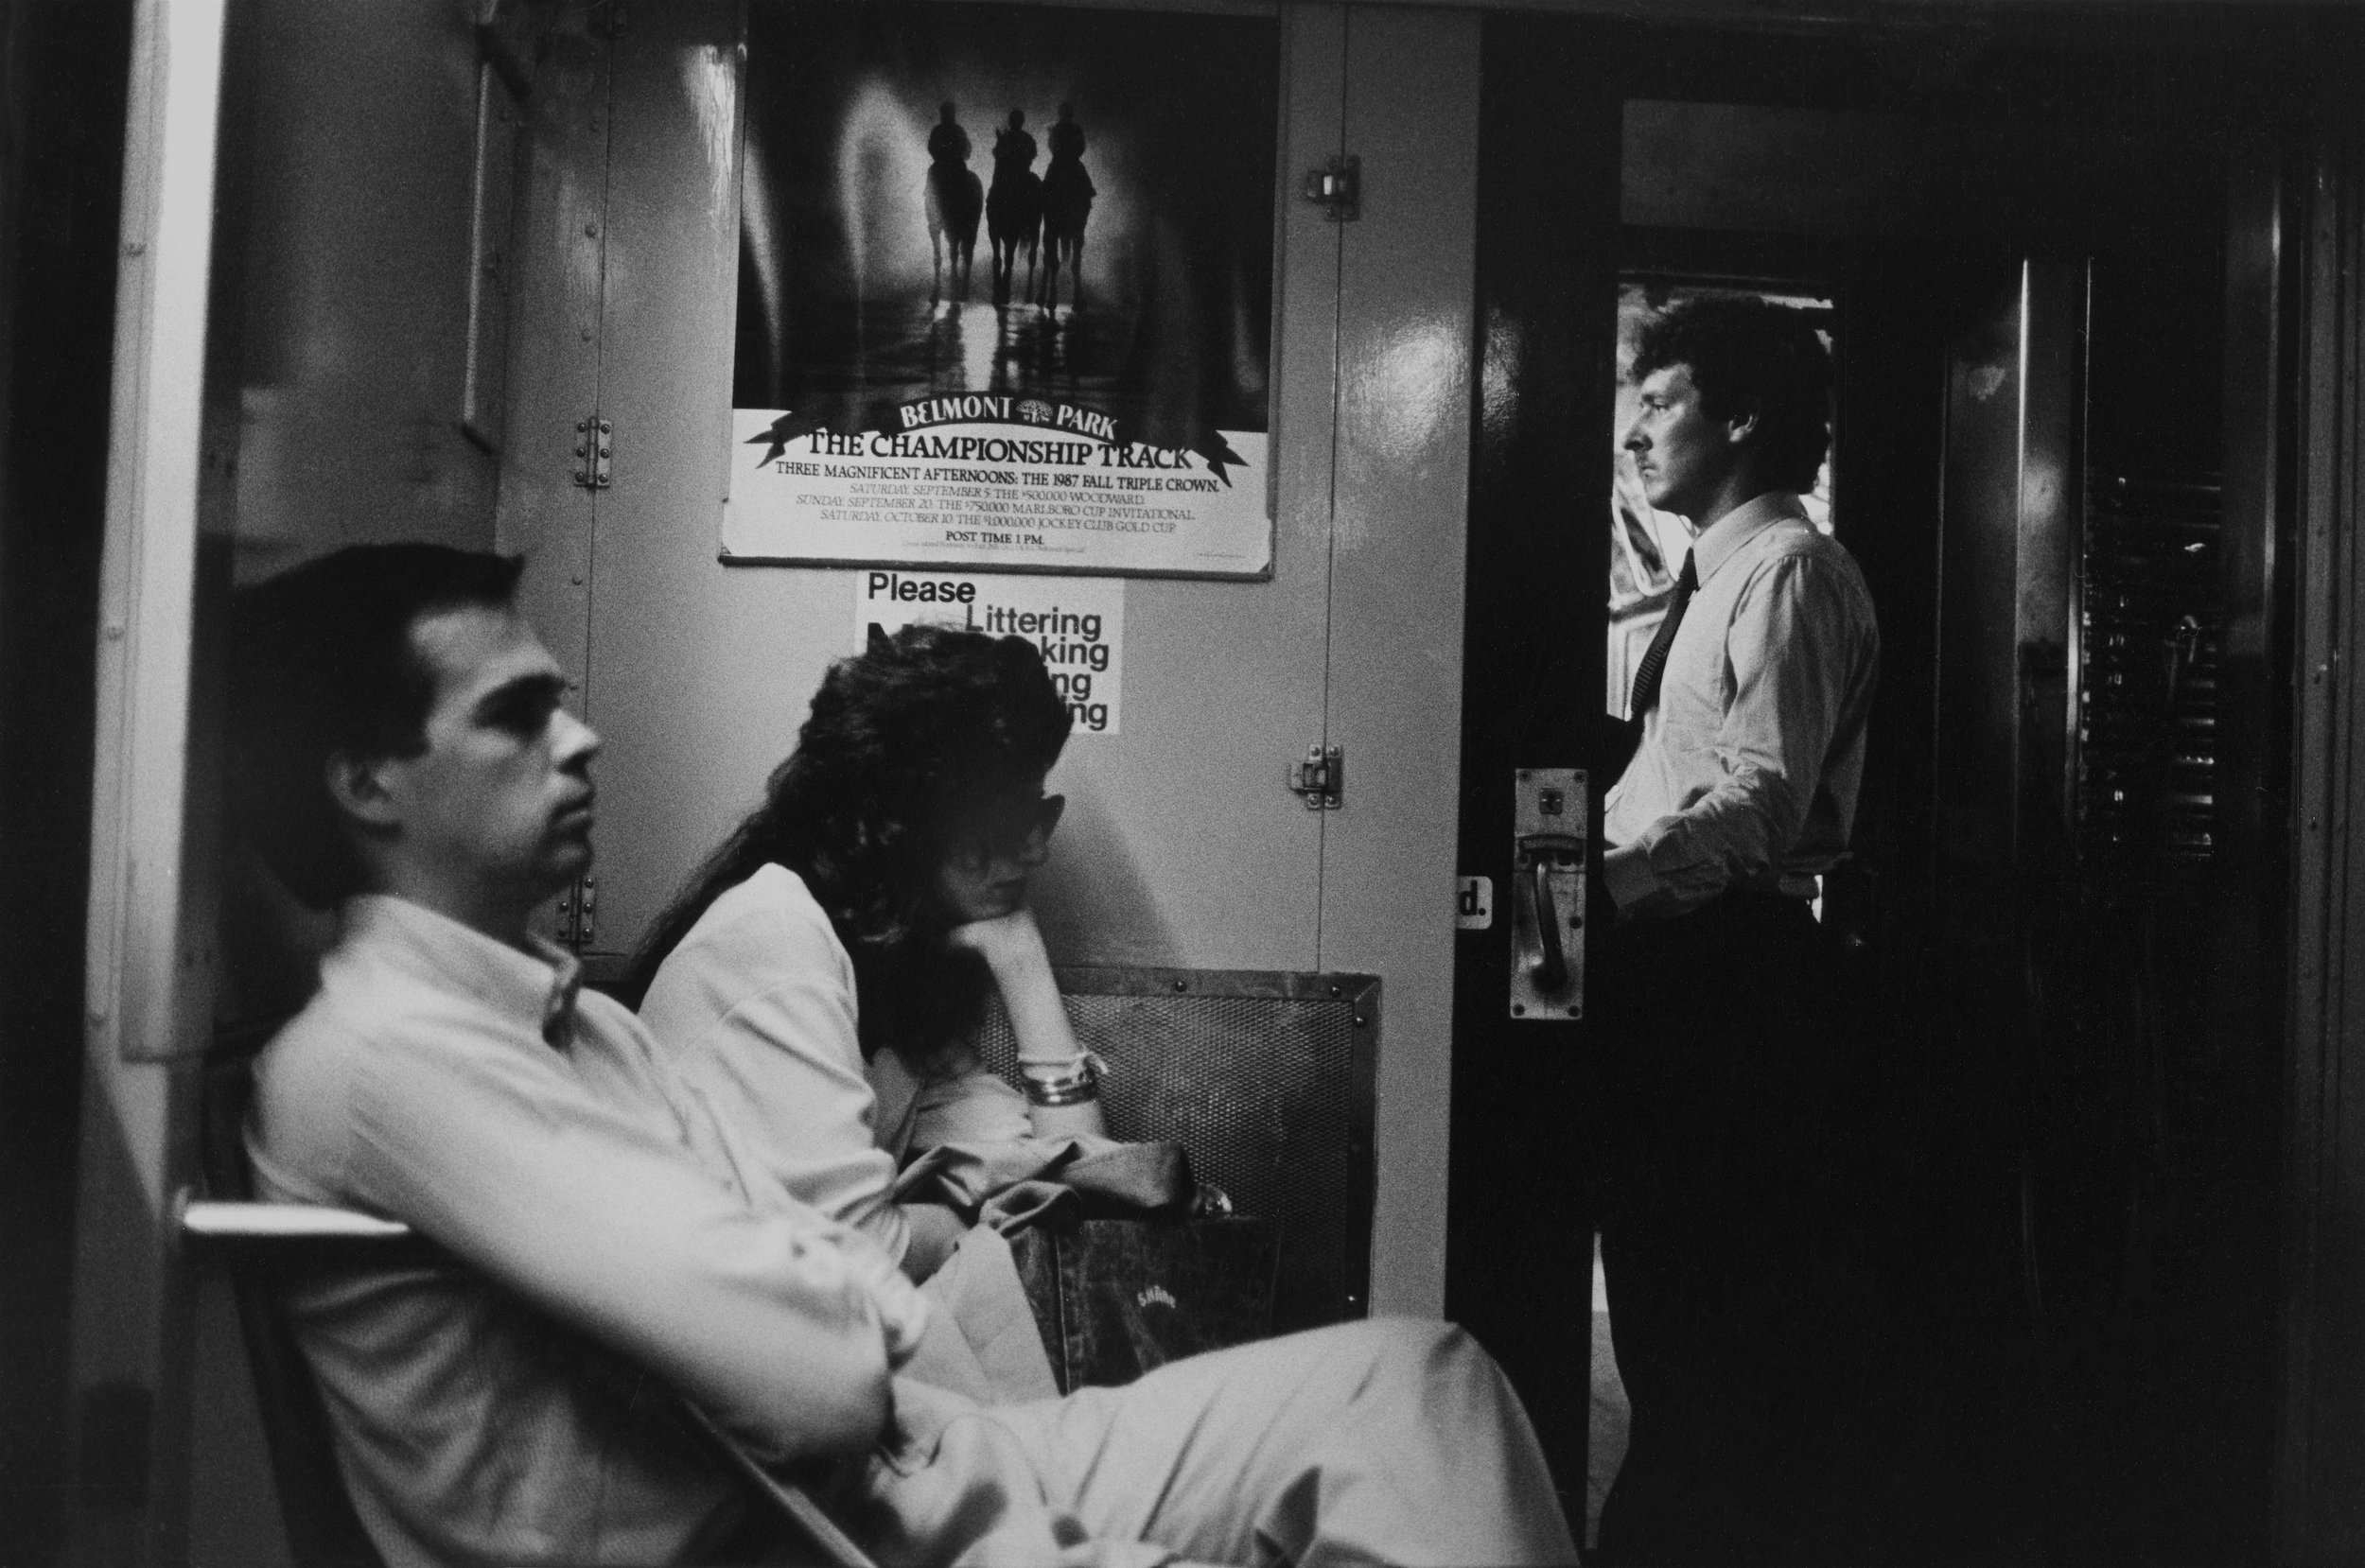 profiles on dark subway car, nyc, c. 1981